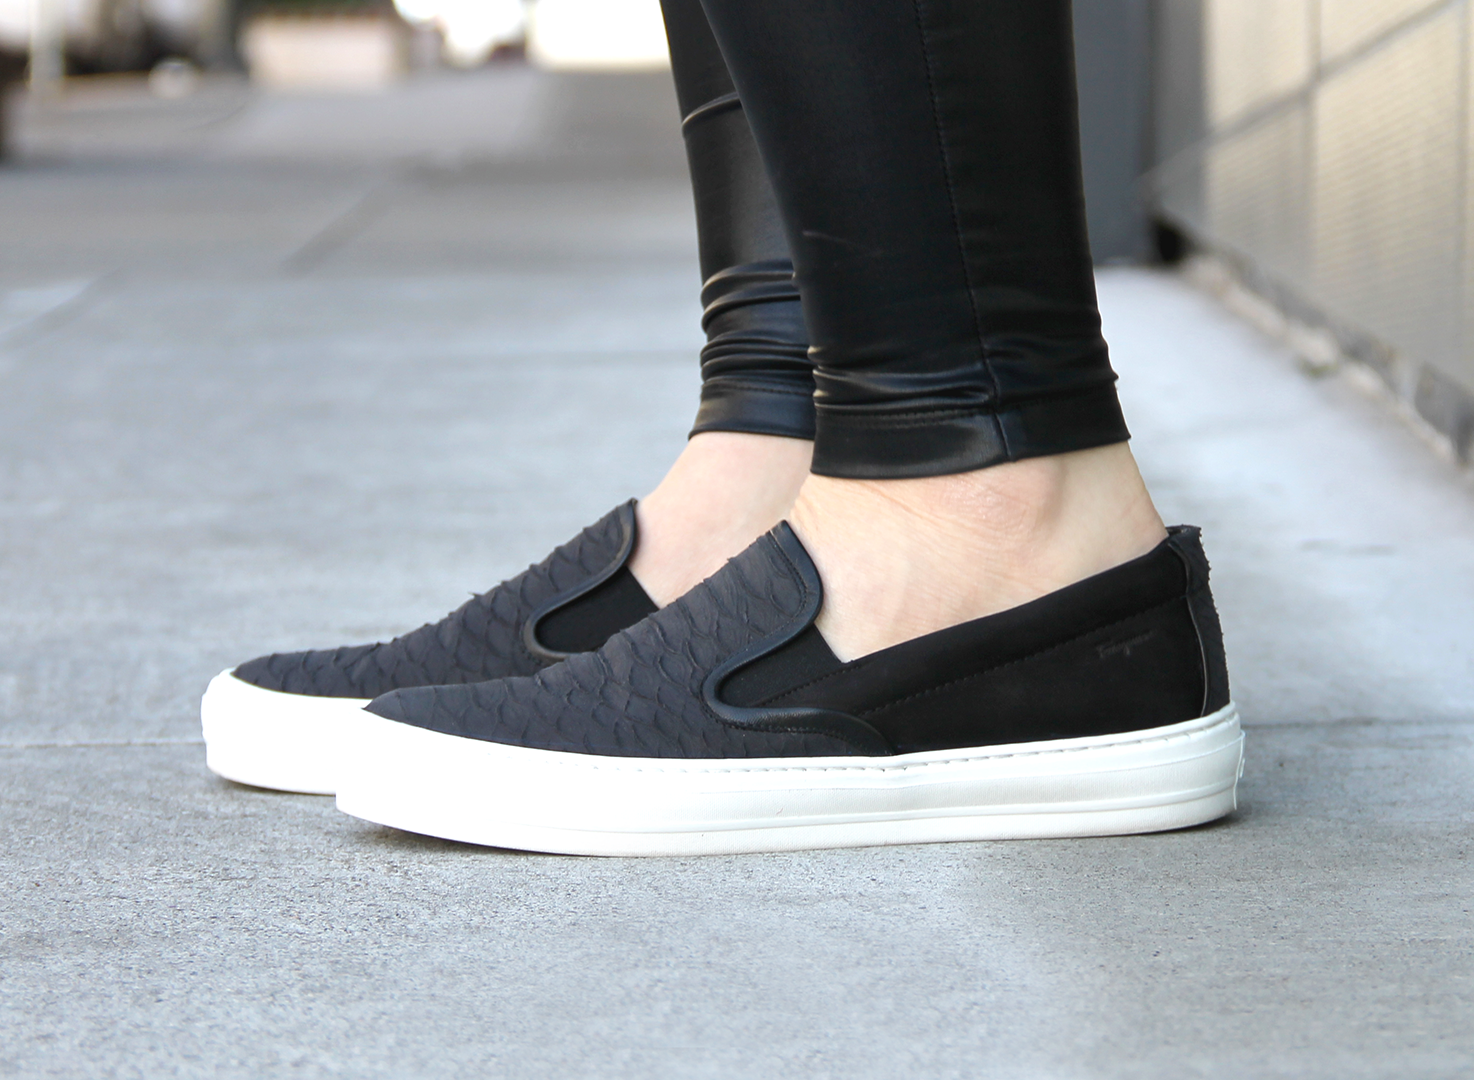 Salvatore Ferragamo slip on sneakers featured by popular San Francisco fashion blogger, Just Add Glam